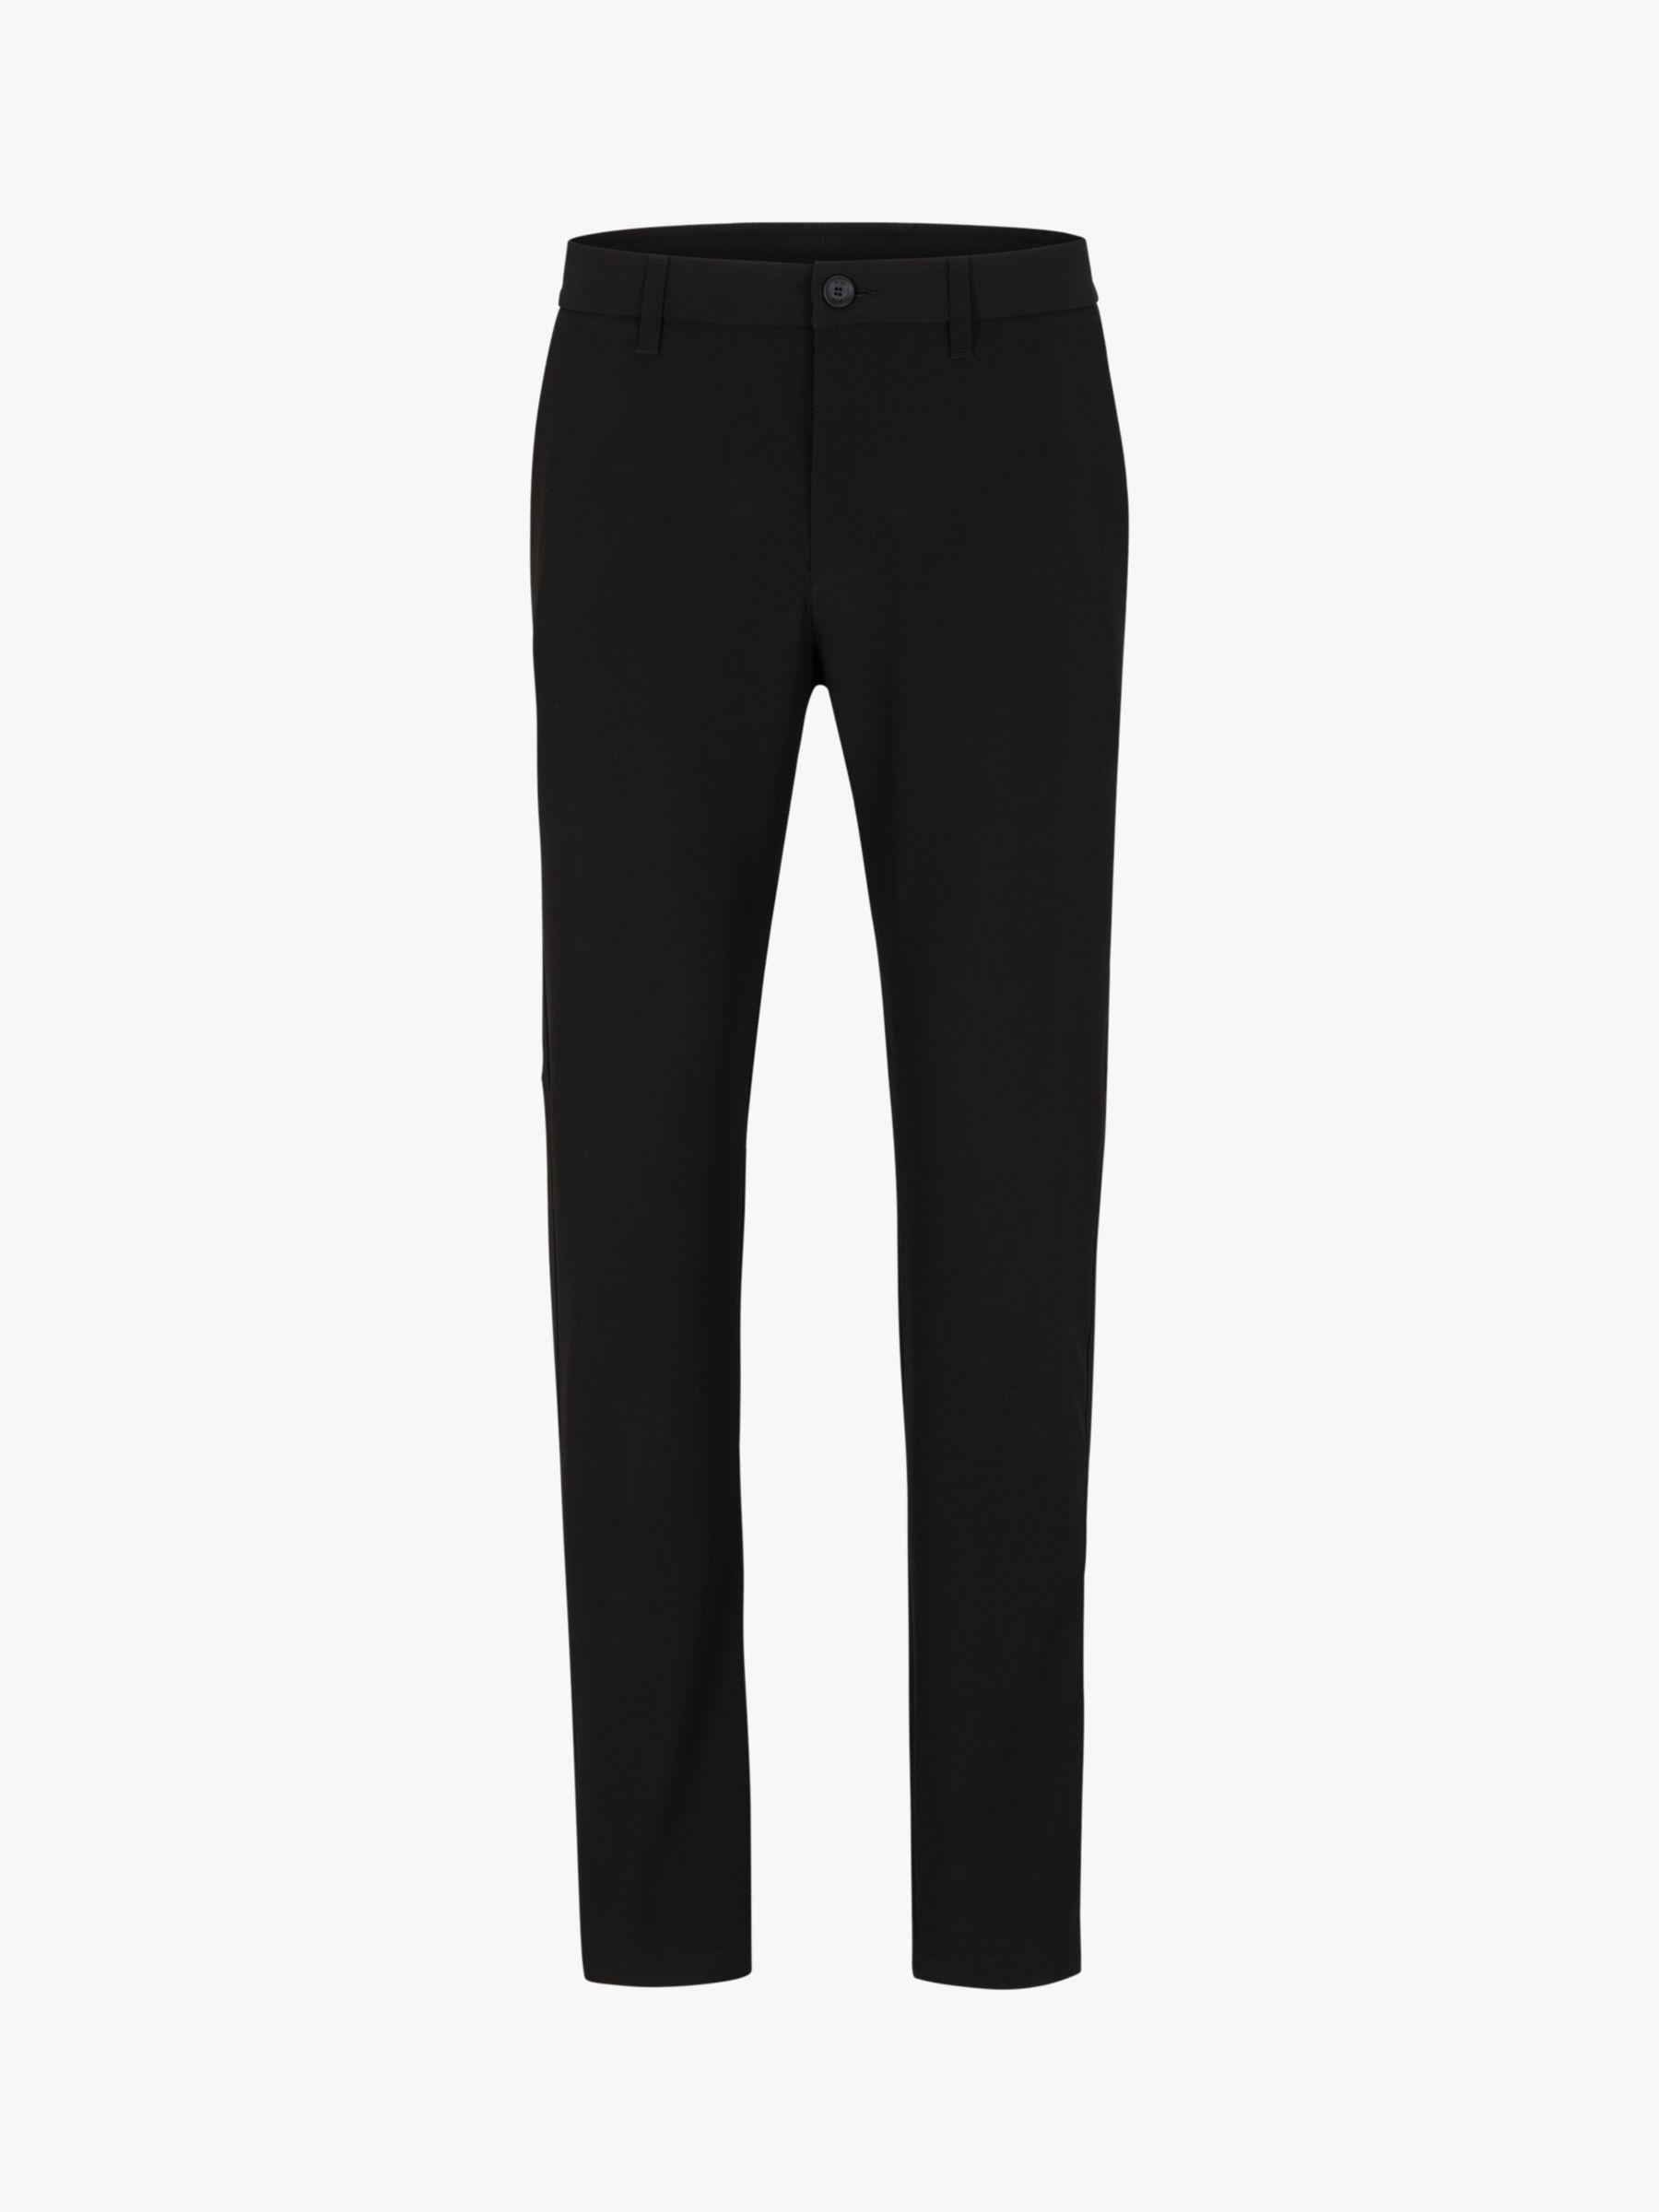 BOSS Commuter Slim Fit Trousers, Black at John Lewis & Partners